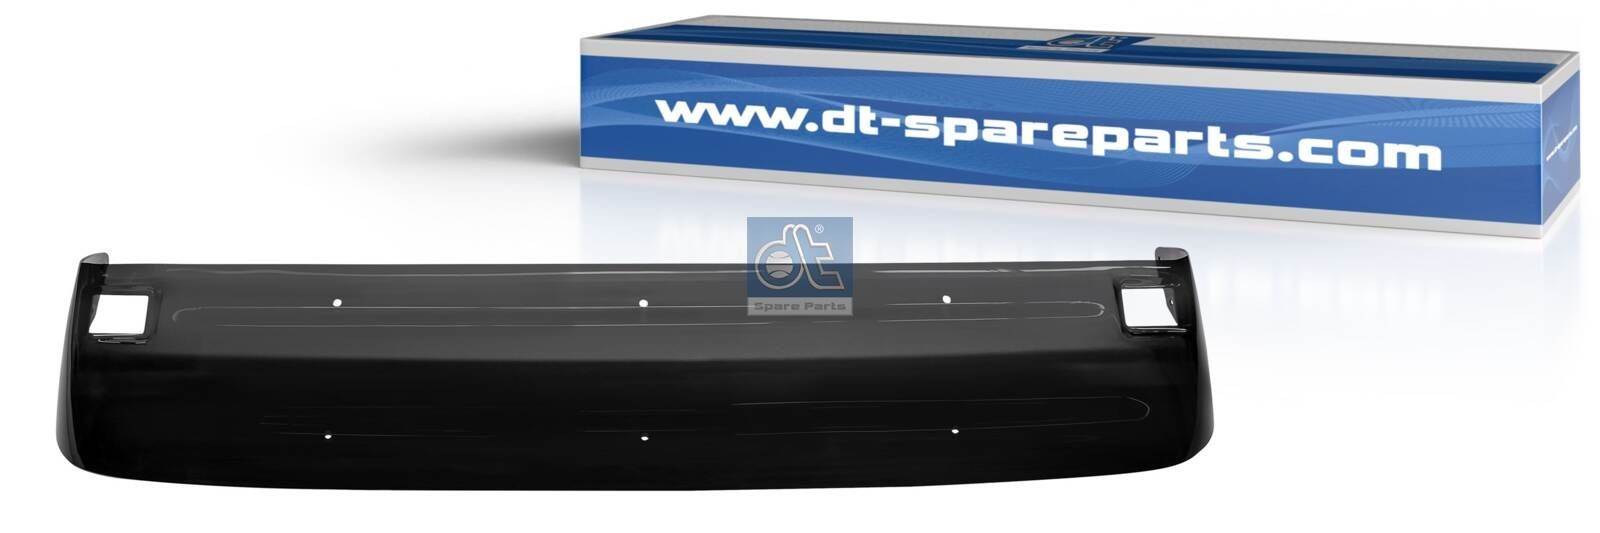 DT Spare Parts Sun Visor 1.22233 buy